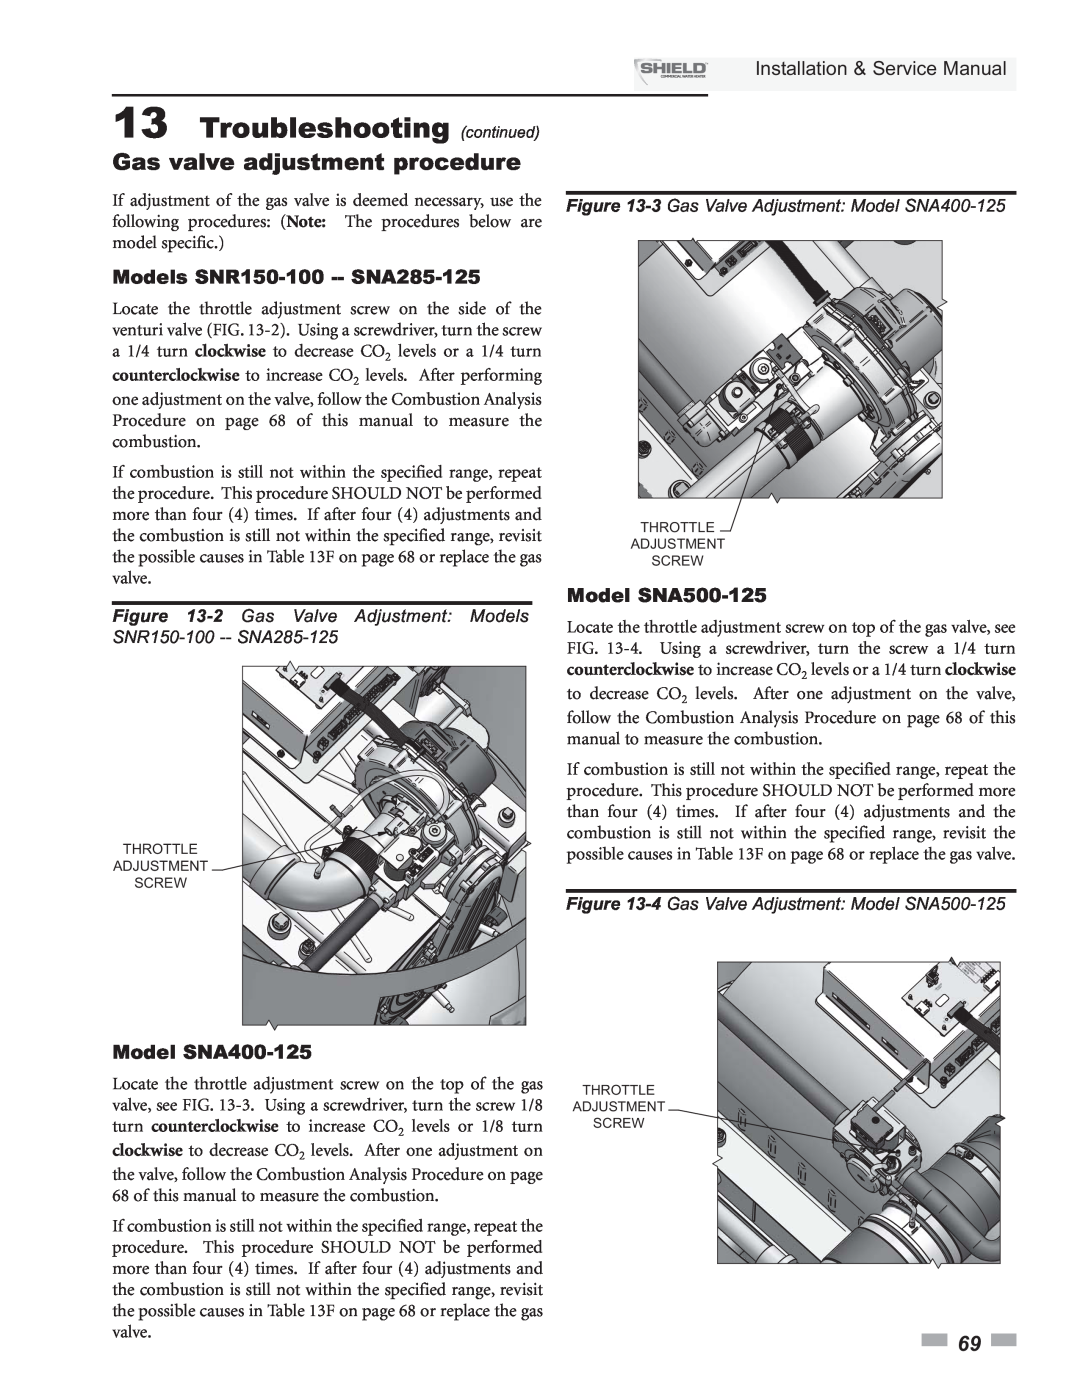 Lochinvar SNA400-125, SNA500-125 Gas valve adjustment procedure, Troubleshooting continued, Installation & Service Manual 